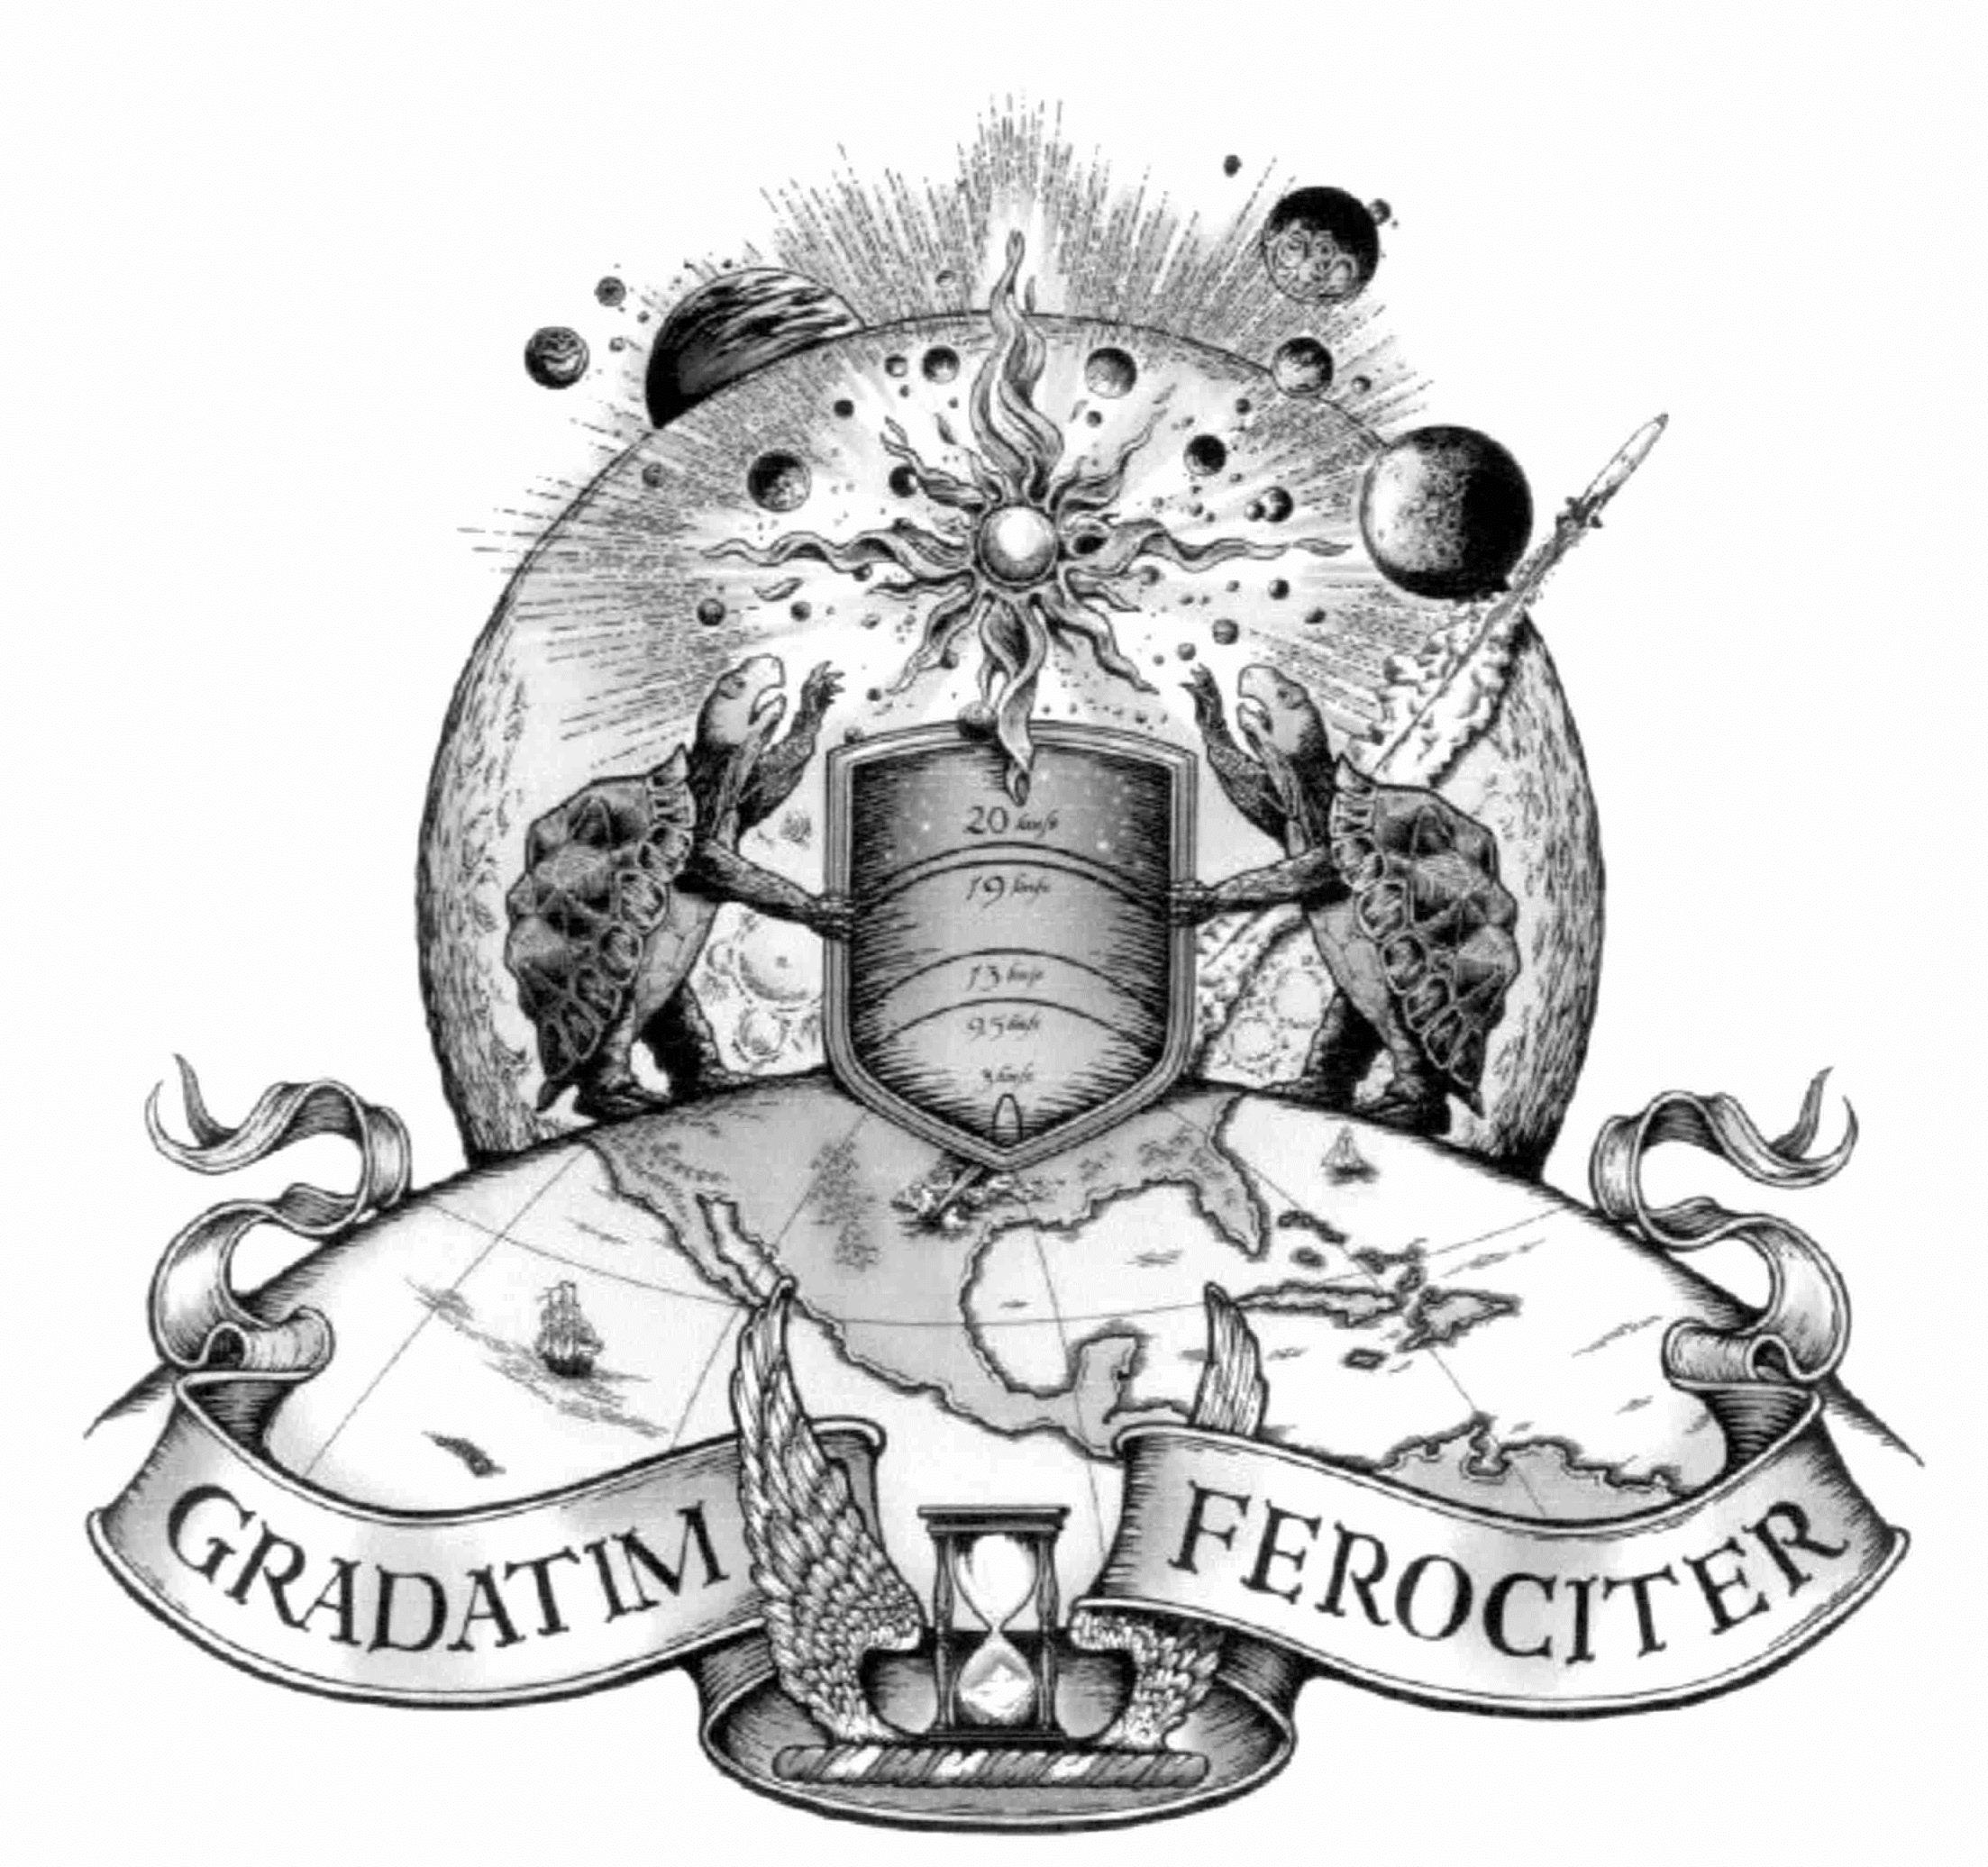 Trademark Logo GRADATIM FEROCITER